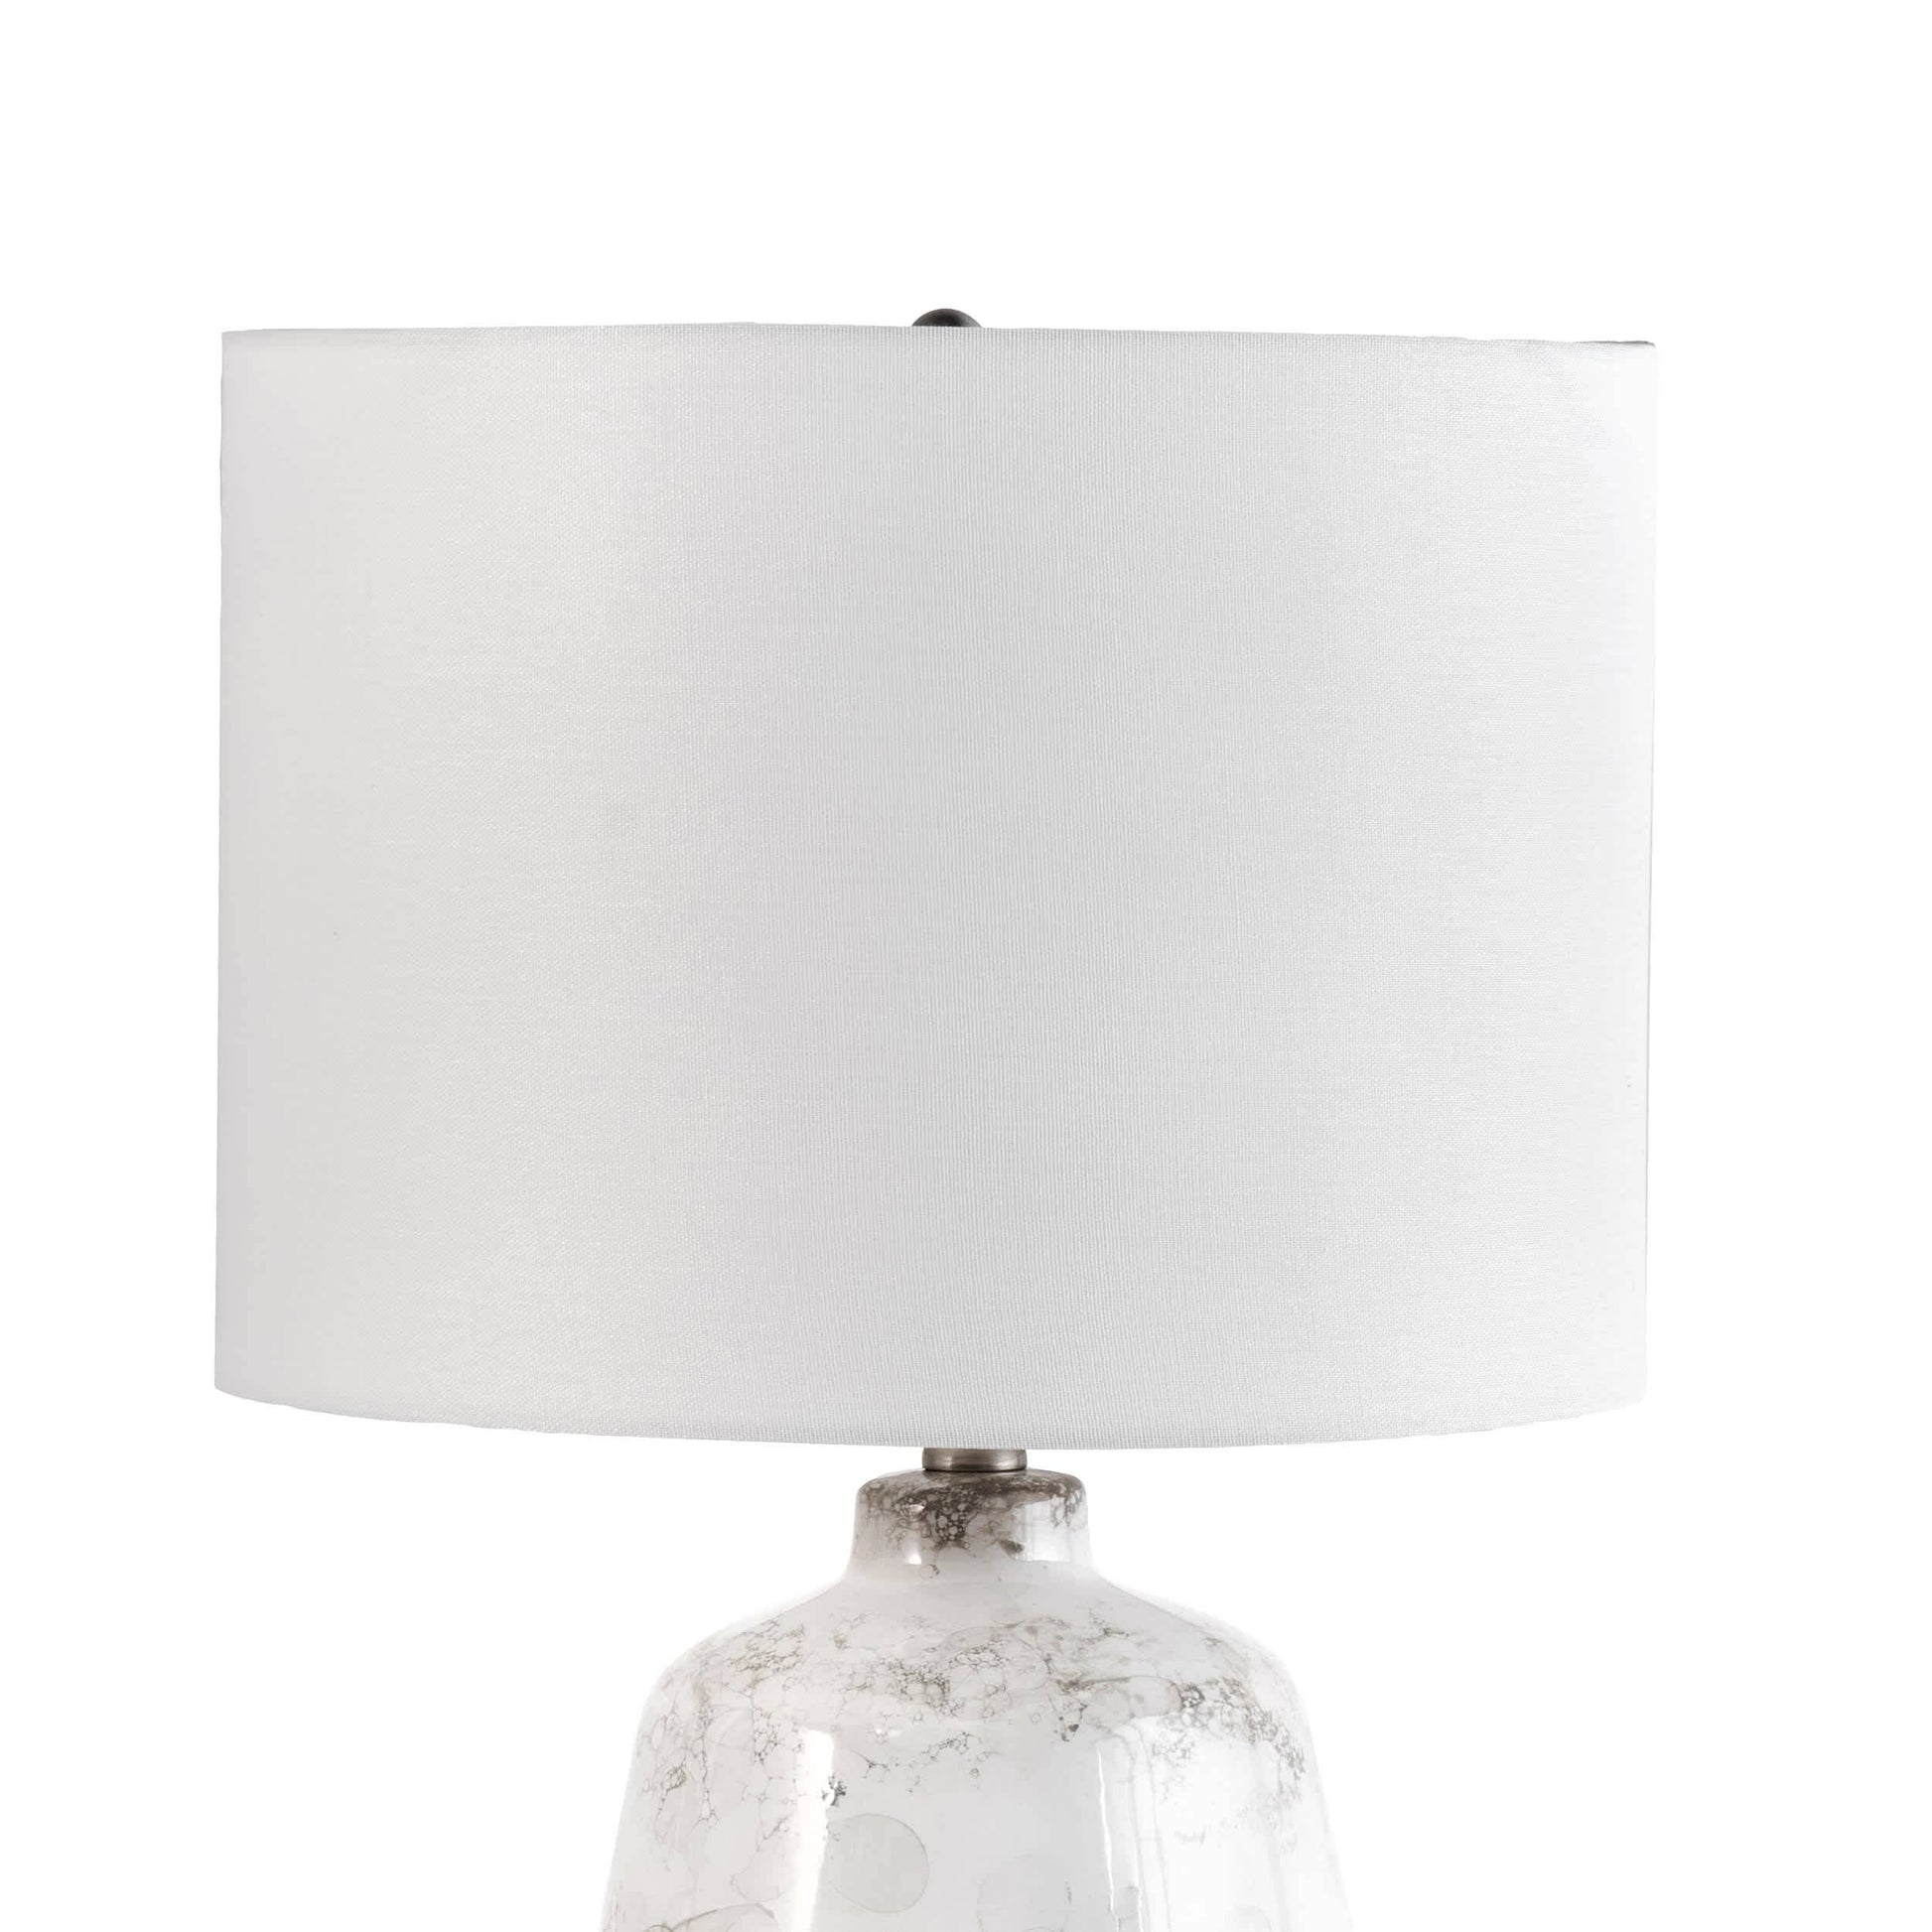 White Ceramic Table Lamp Shade